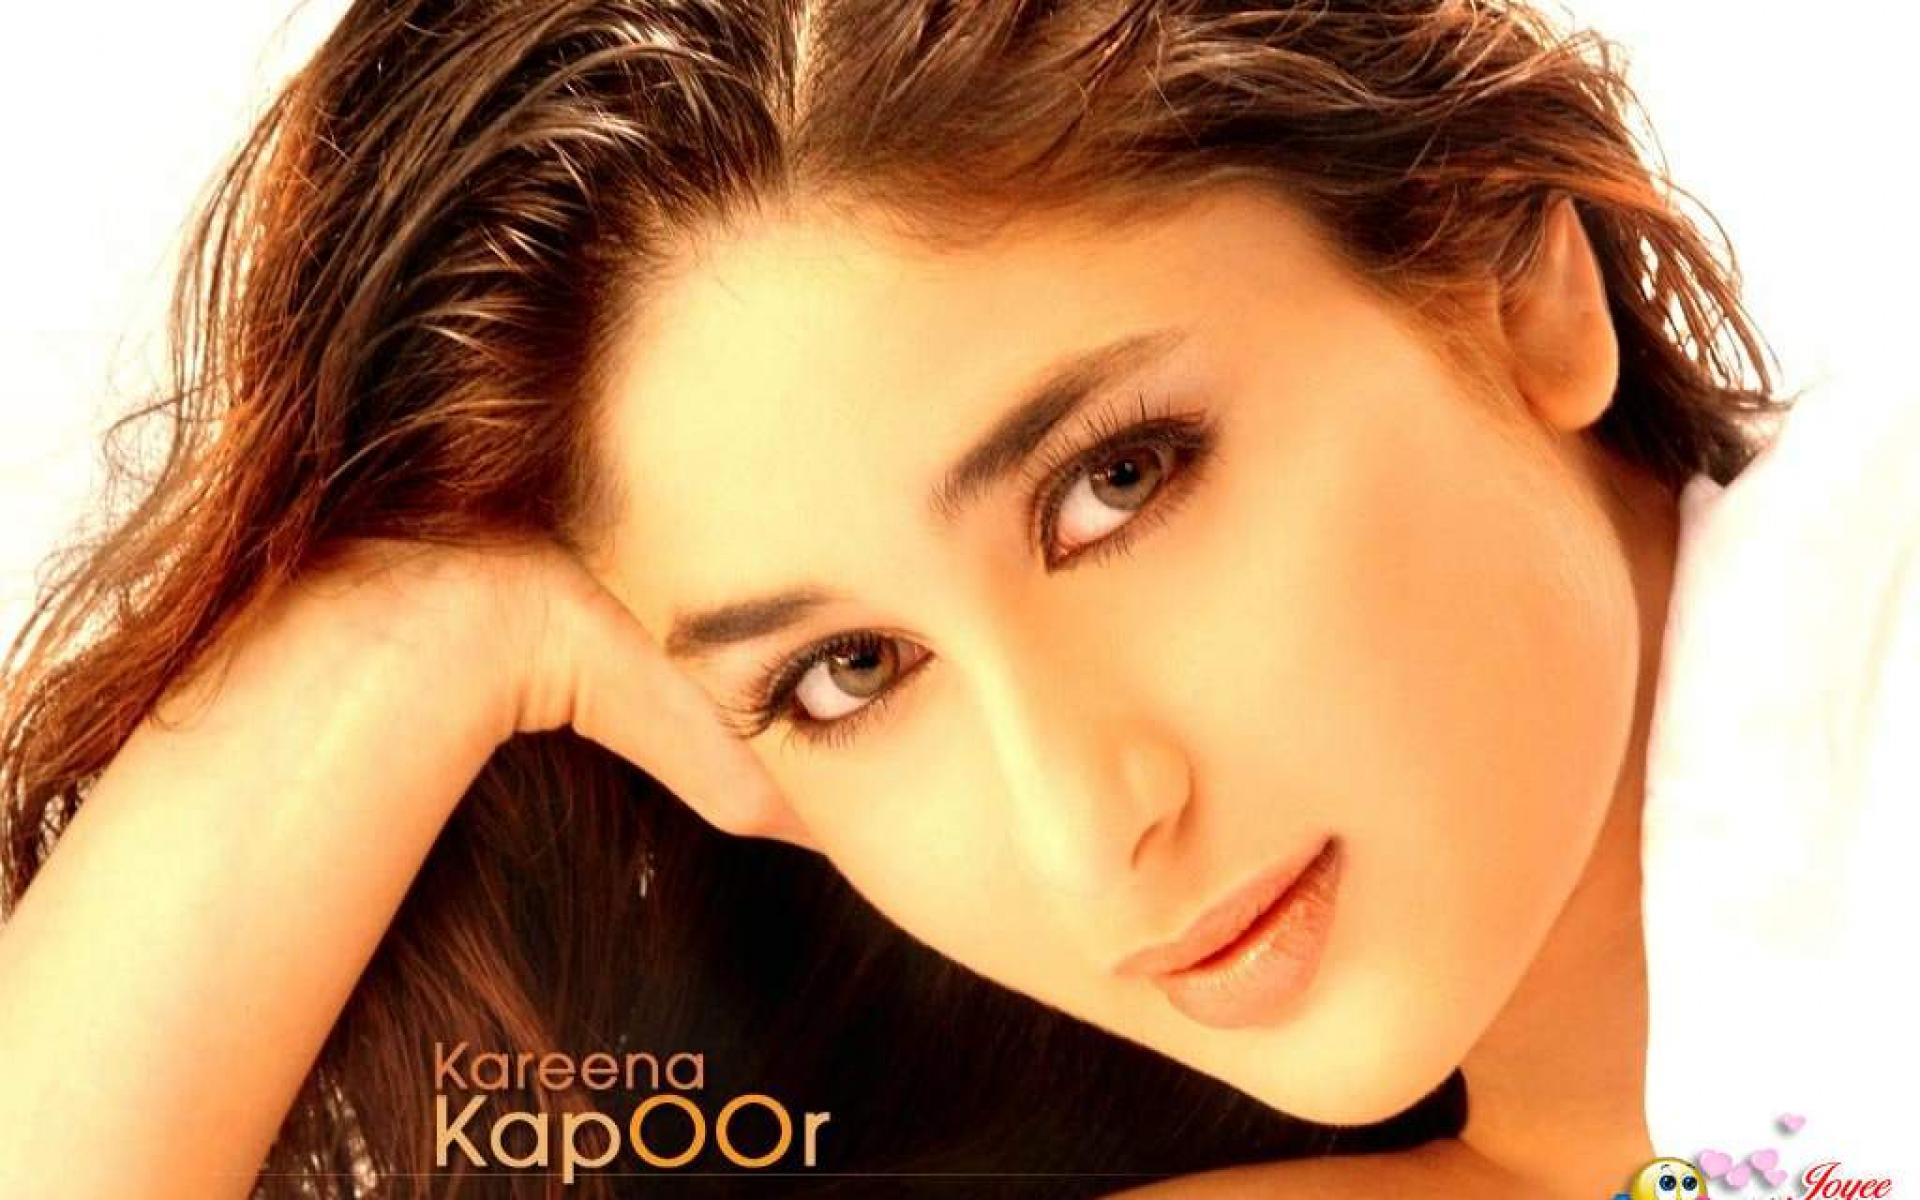 Kareena Kapoor 4k full HD wallpaper photo pics wide 1080p hd67447